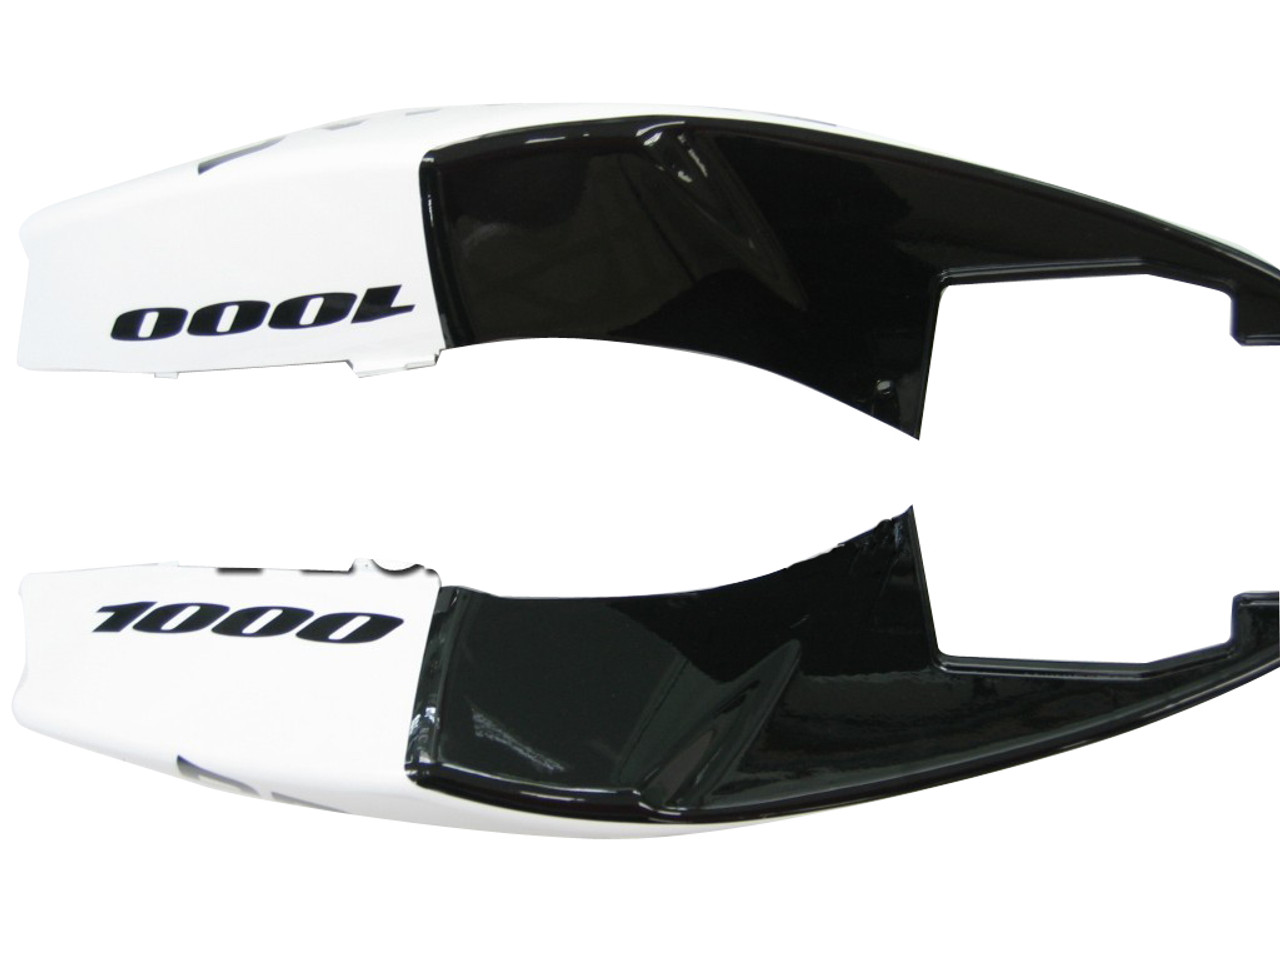 Fairings Suzuki GSXR 1000 White Black Pramac Racing  (2005-2006)